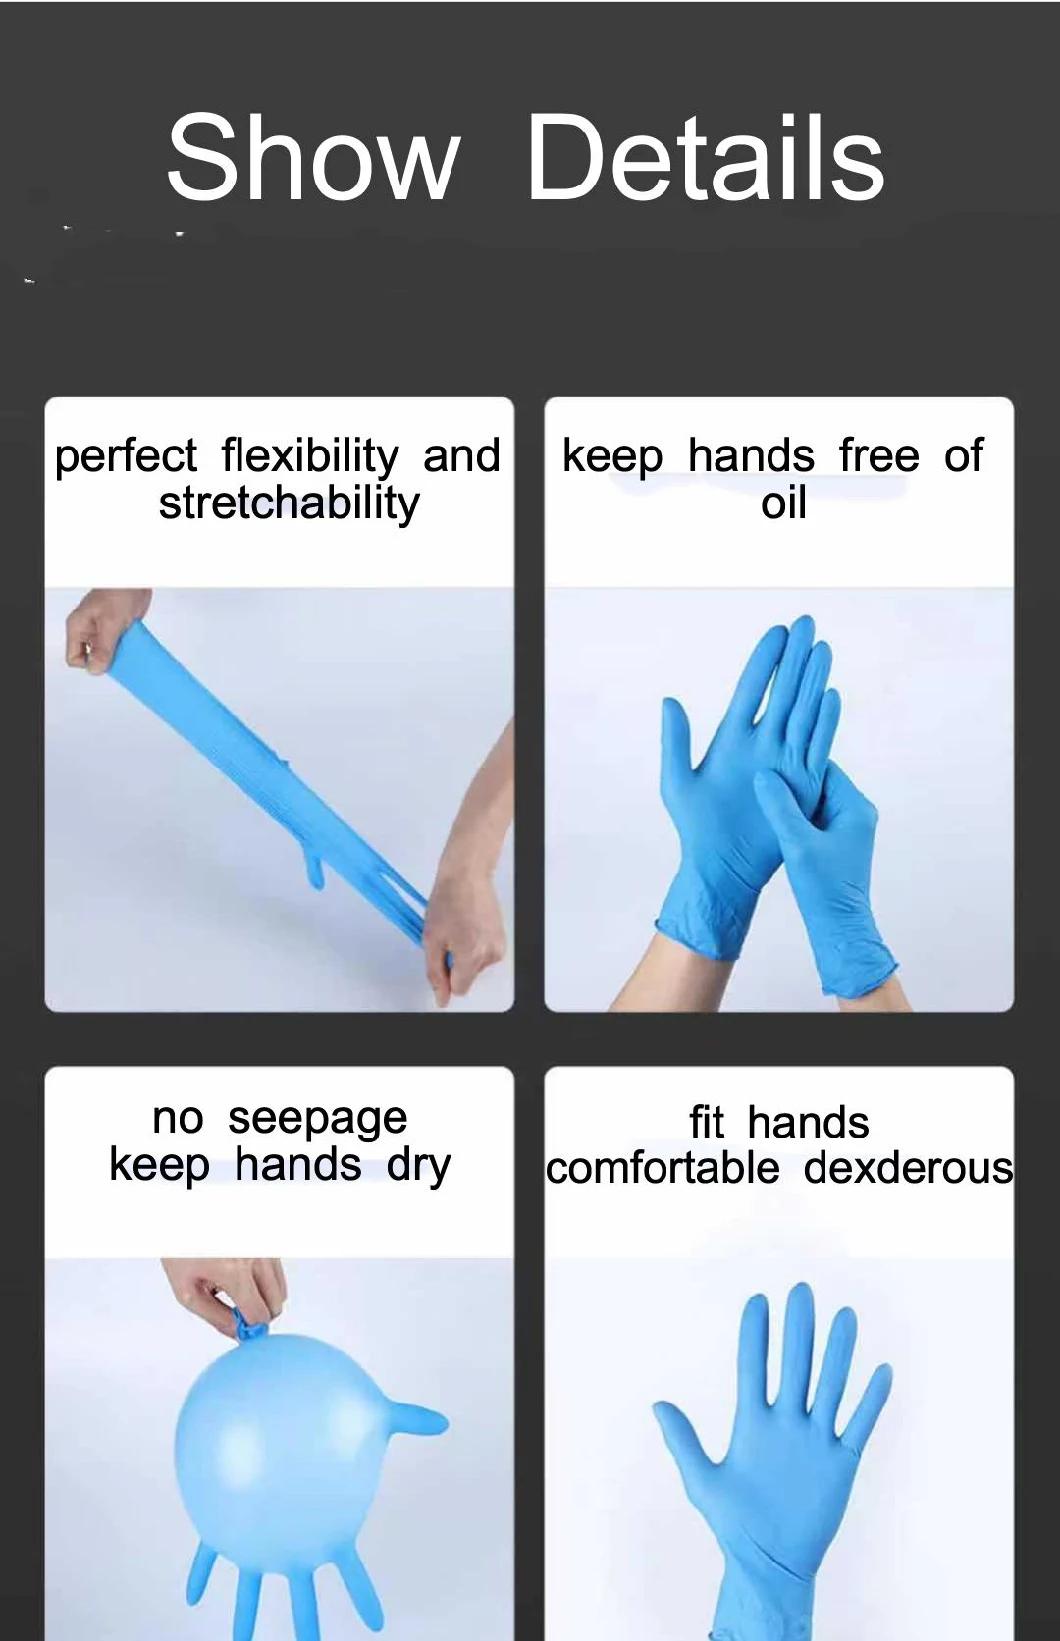 FDA CE Powder Free Disposable Nitrile Vinyl Gloves